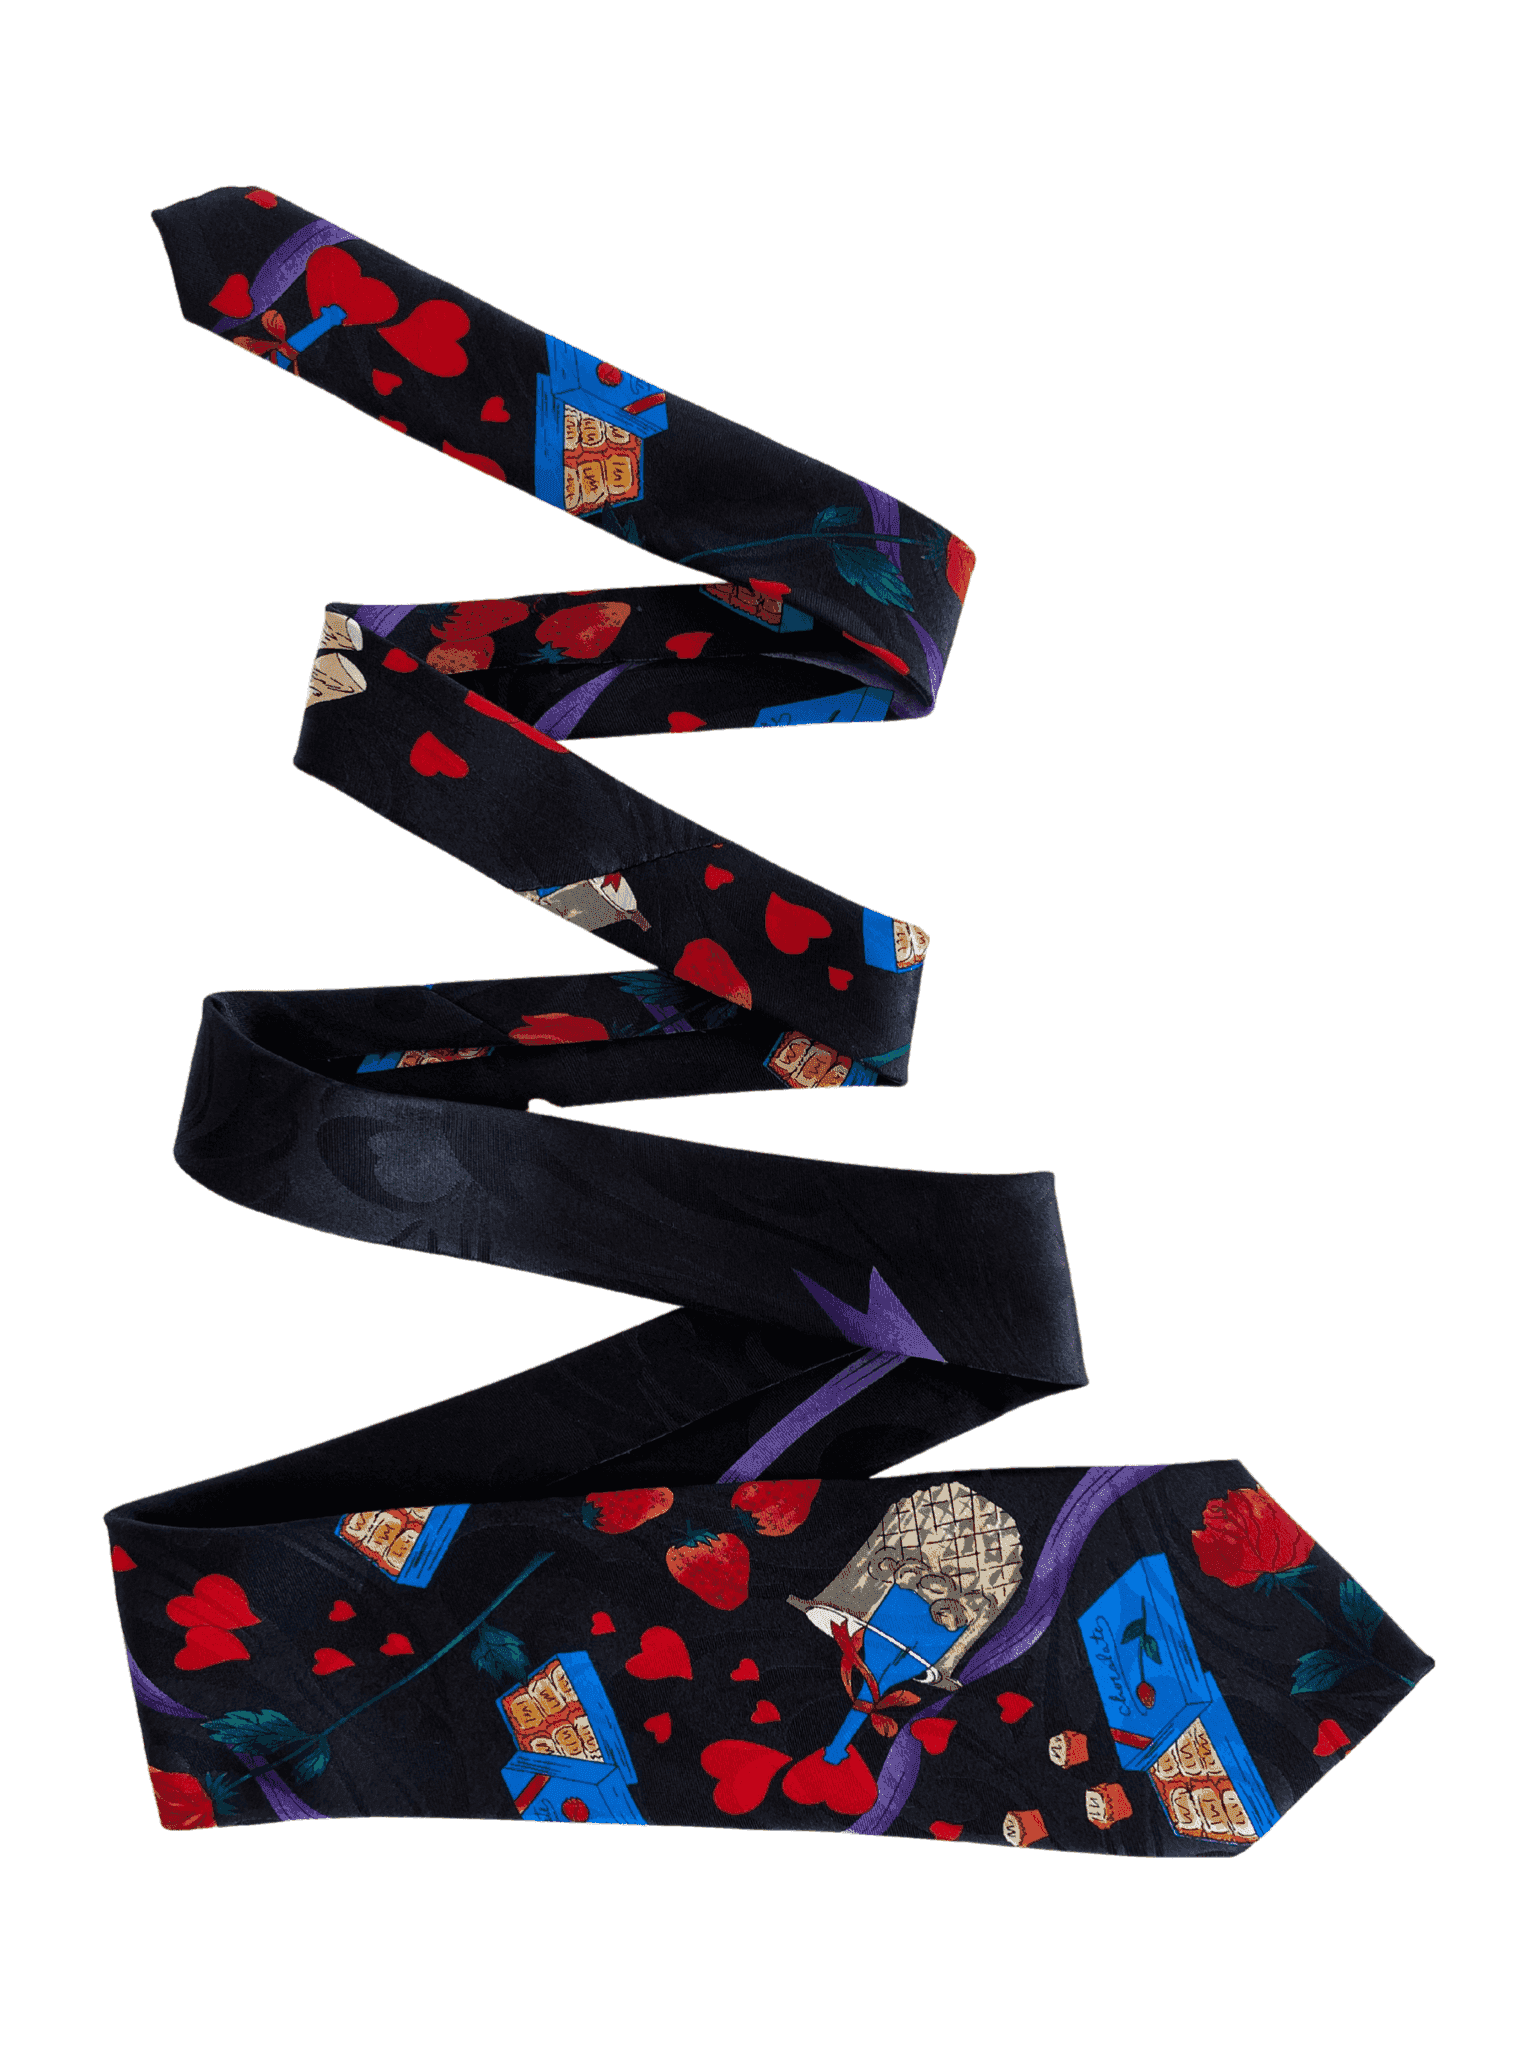 Vintage Fratello Handmade Graphic Tie - Balagan Vintage Ties graphic, graphic ties, printed tie, printed ties, tie, vintage, vintage ties